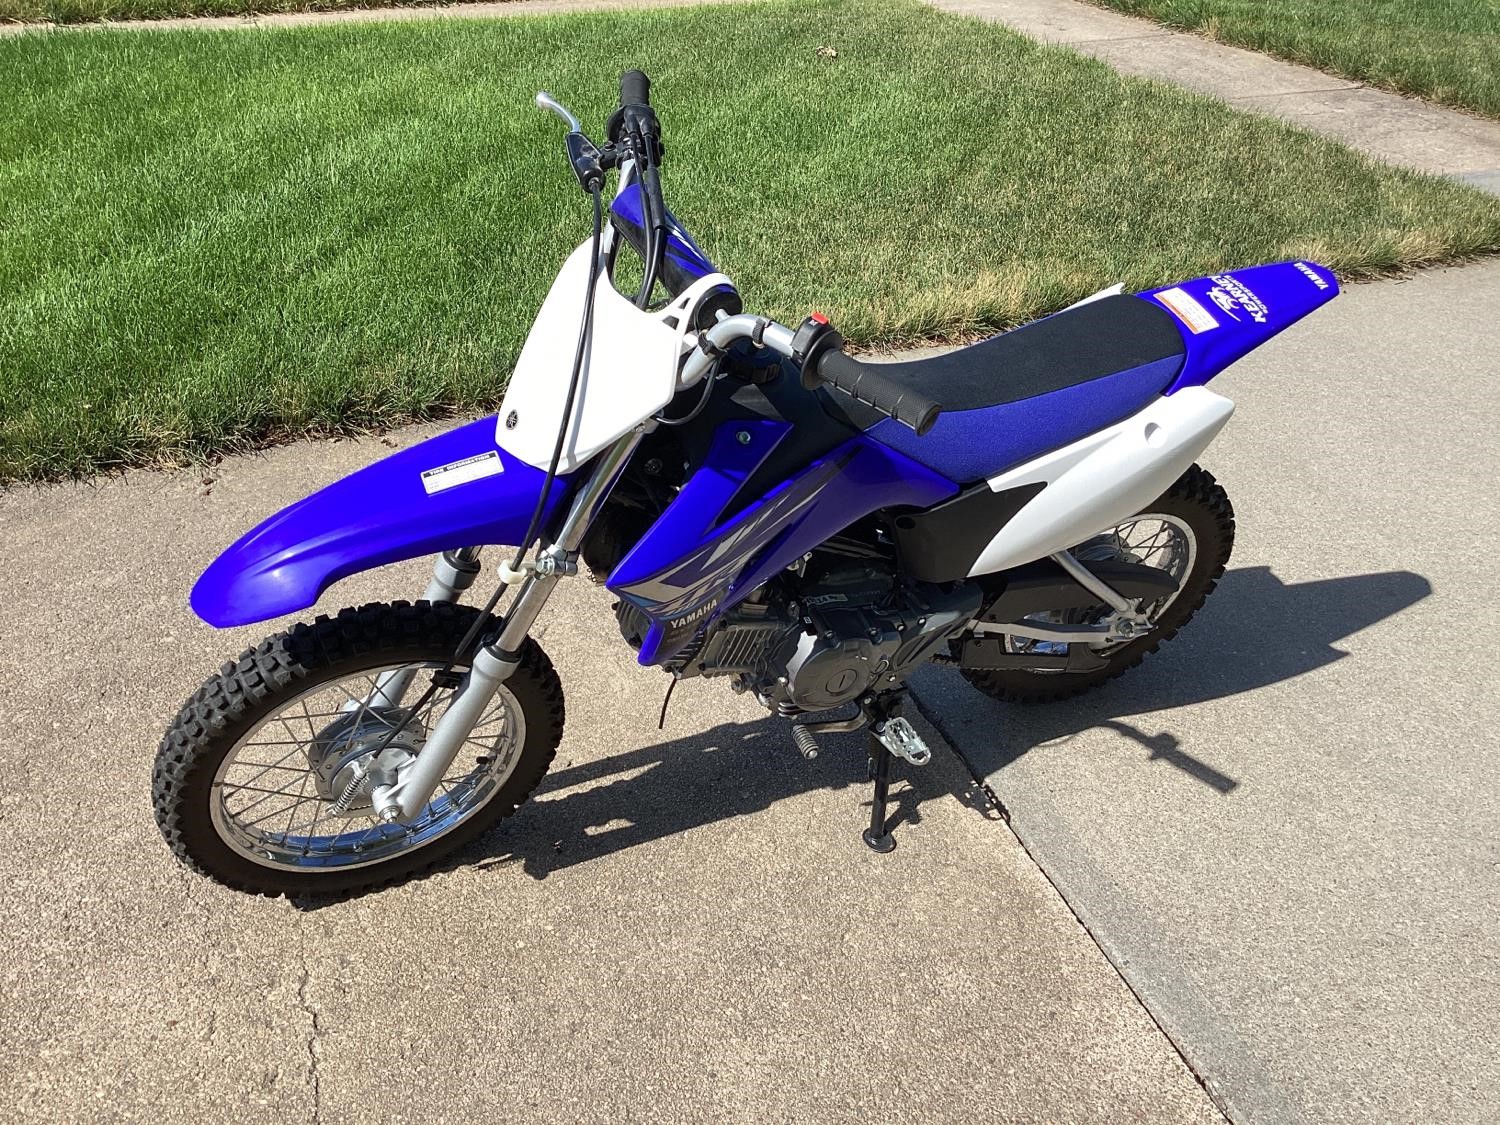 Is This Yamaha's New Mini Moto? 